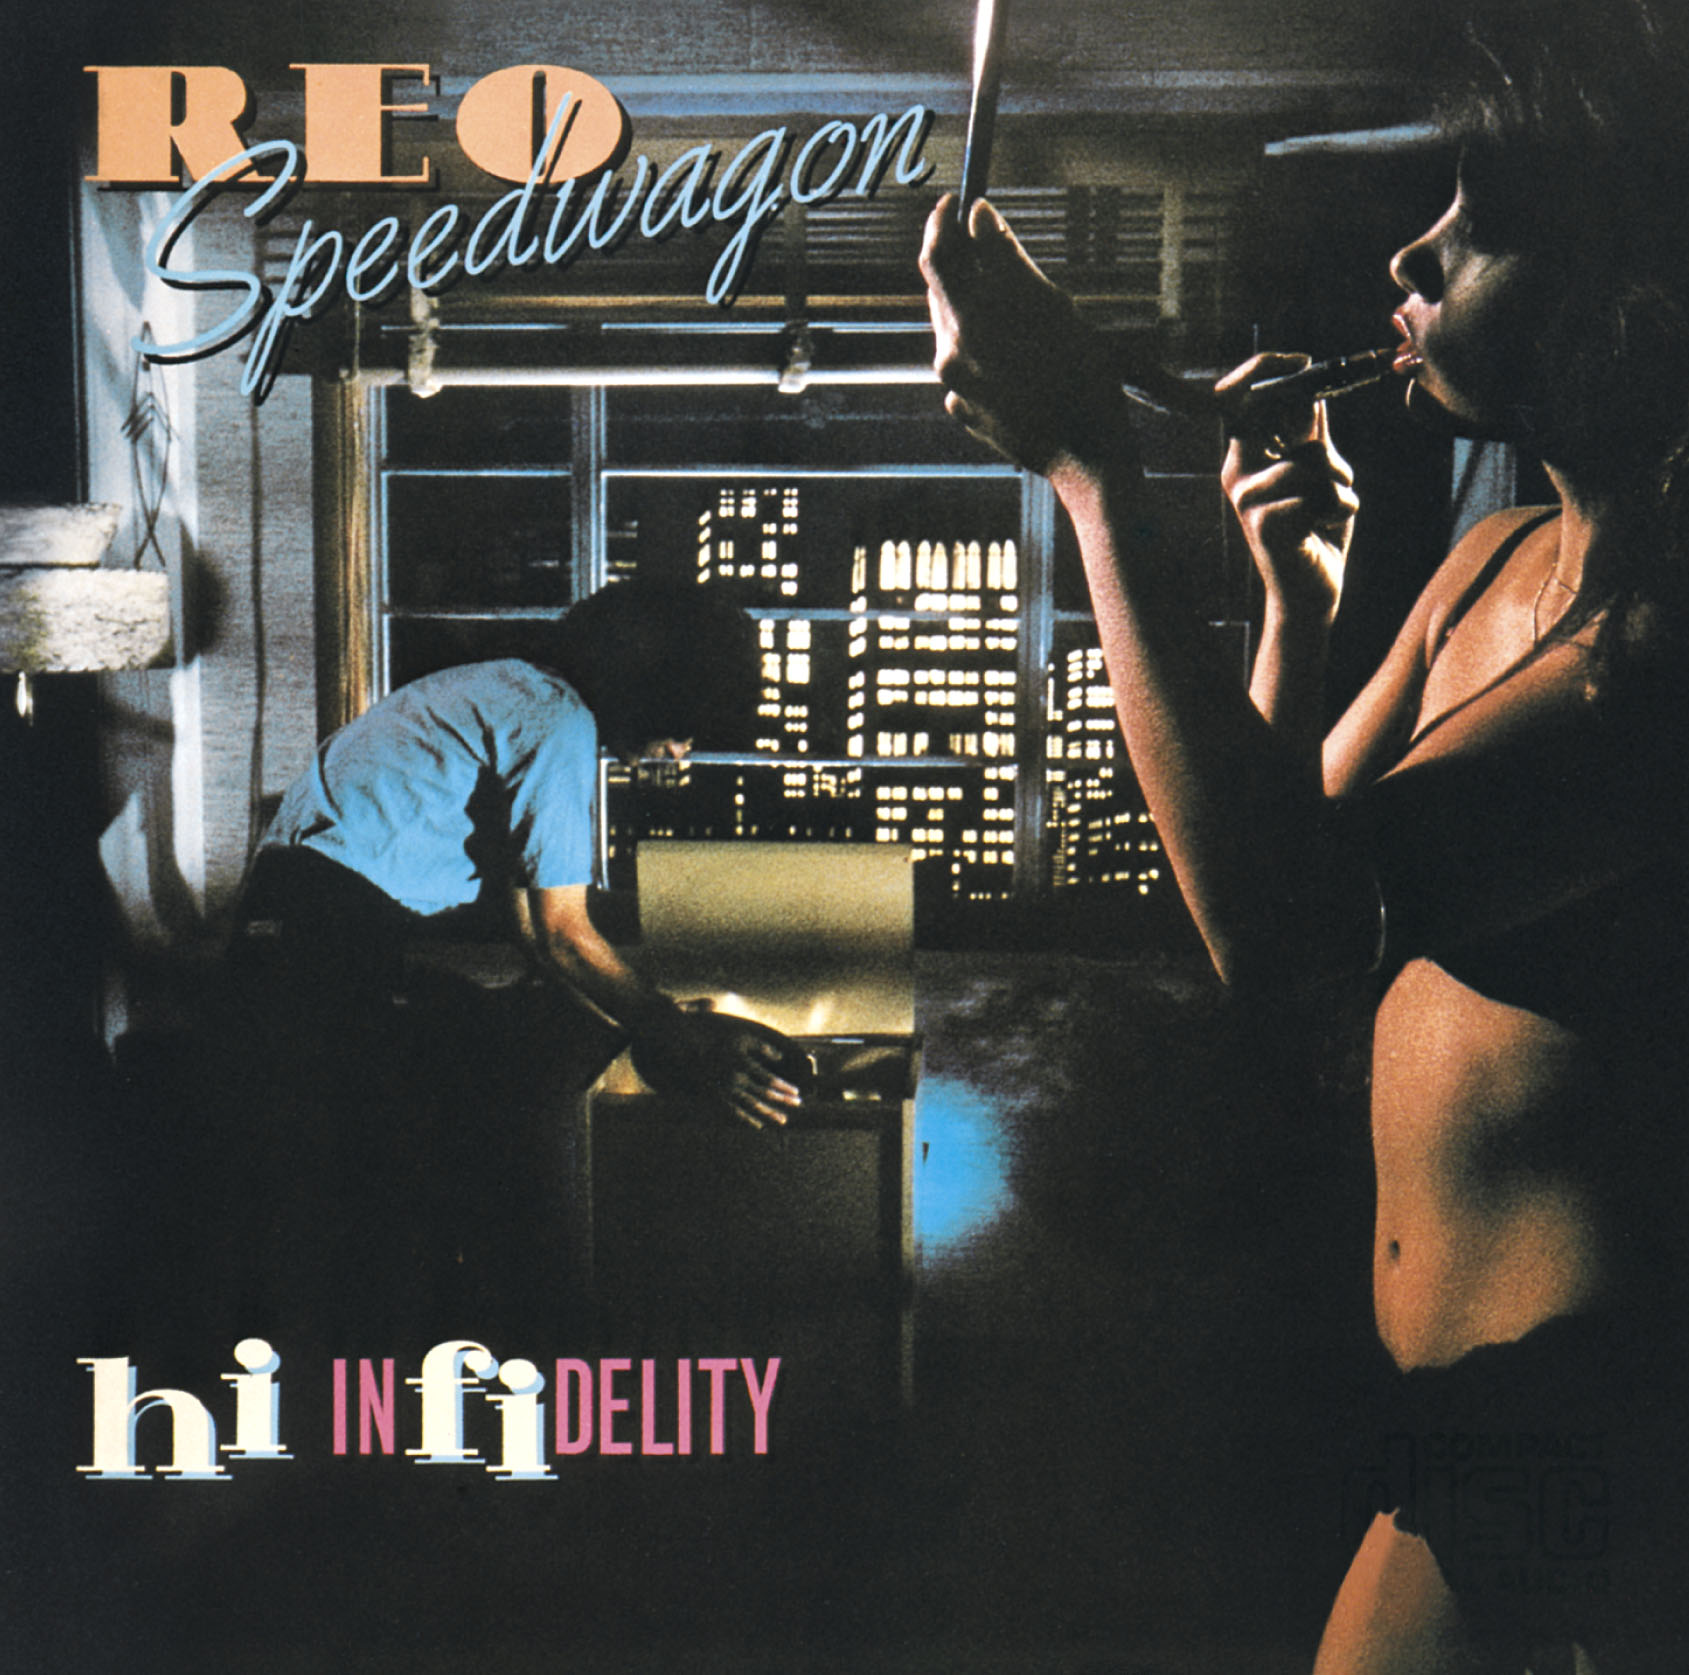 REO Speedwagon — Tough Guys cover artwork